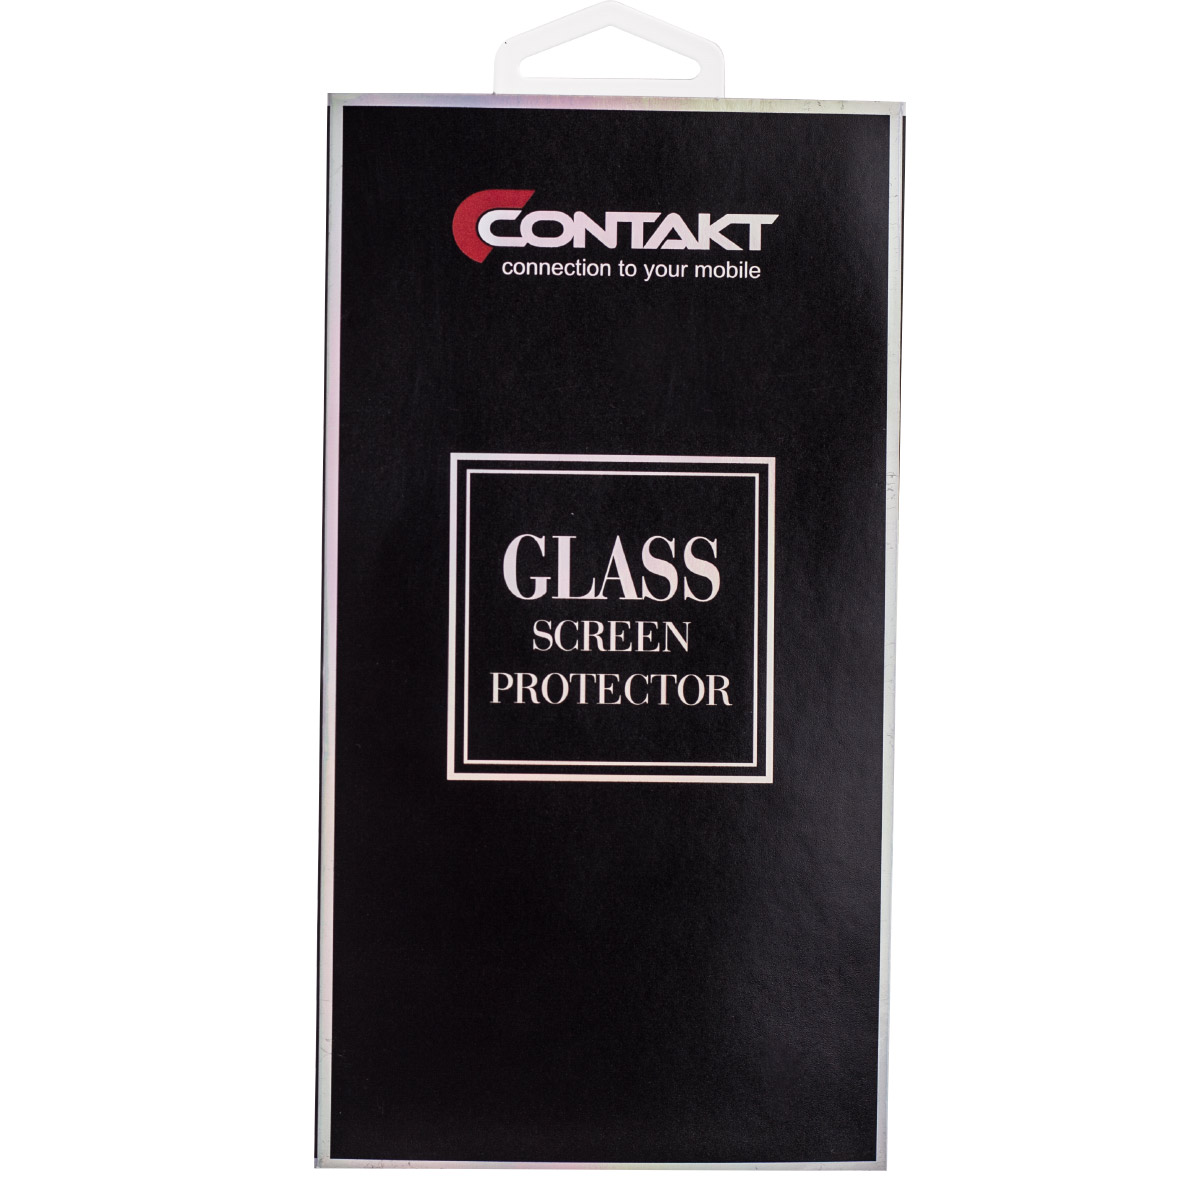 Folie sticla flexibila Huawei P9, Contakt thumb